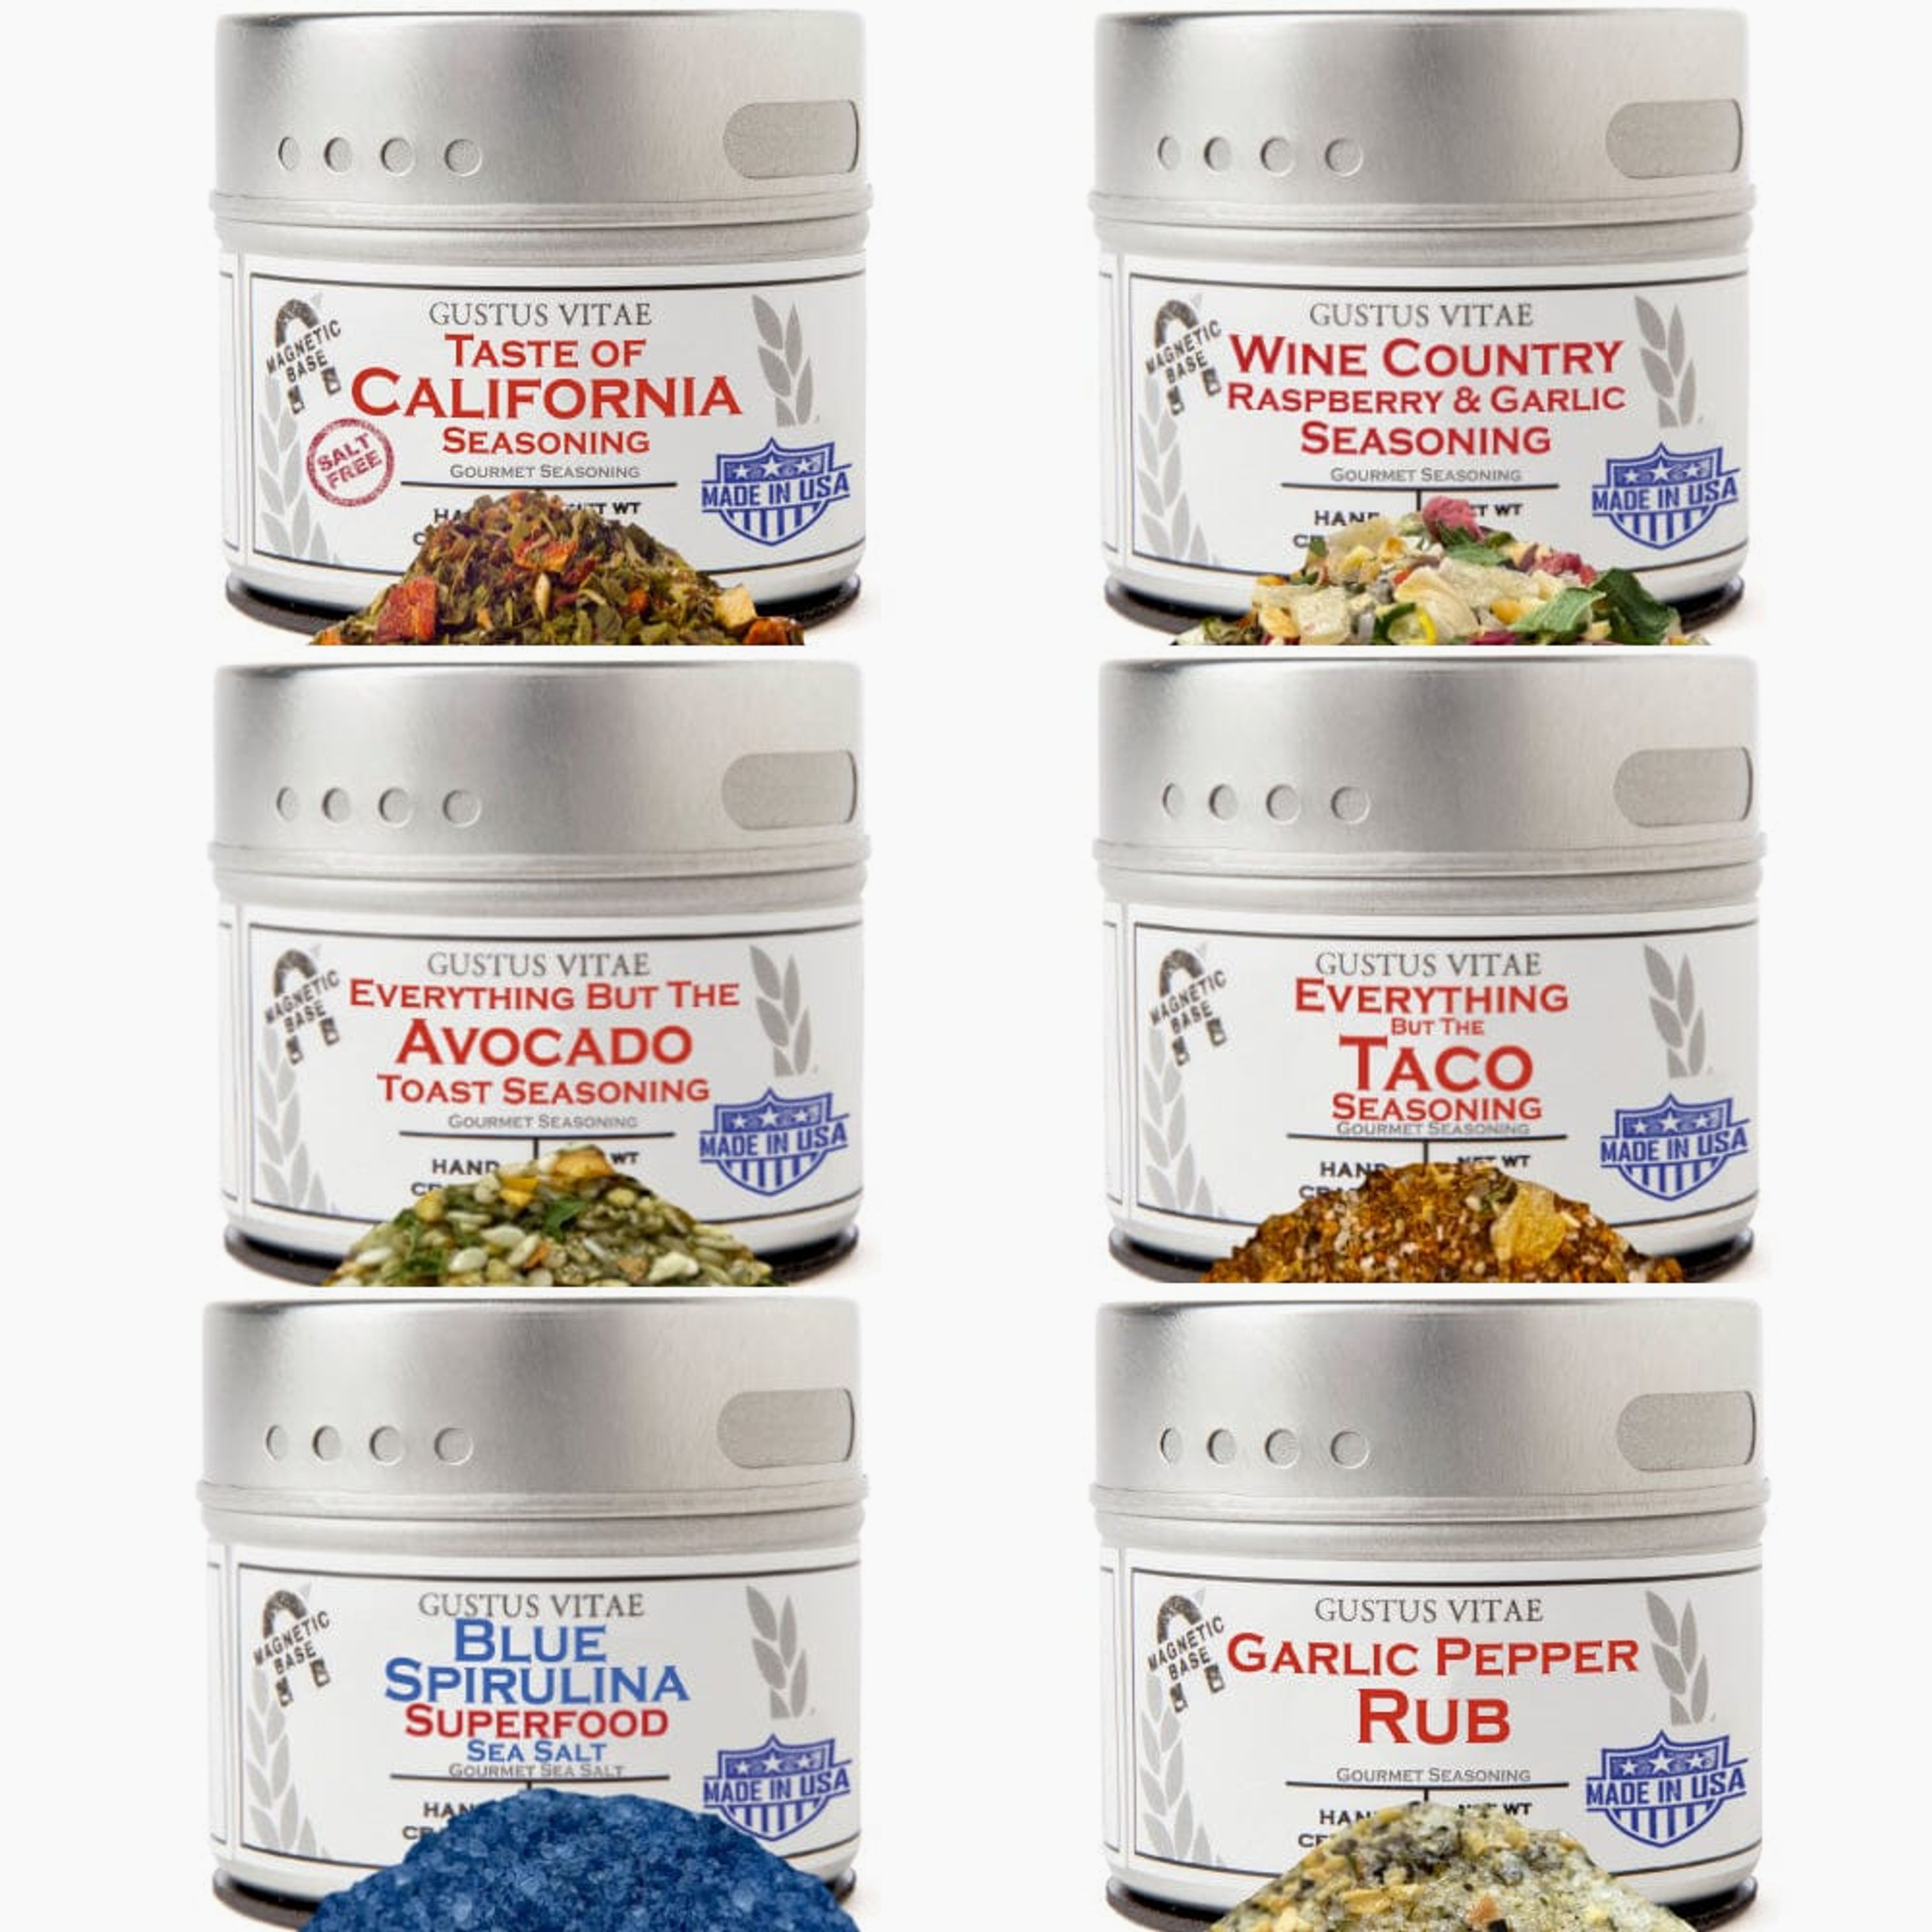 California Seasonings Gift Set - Tastes of California - Artisanal Spice Blends Six Pack